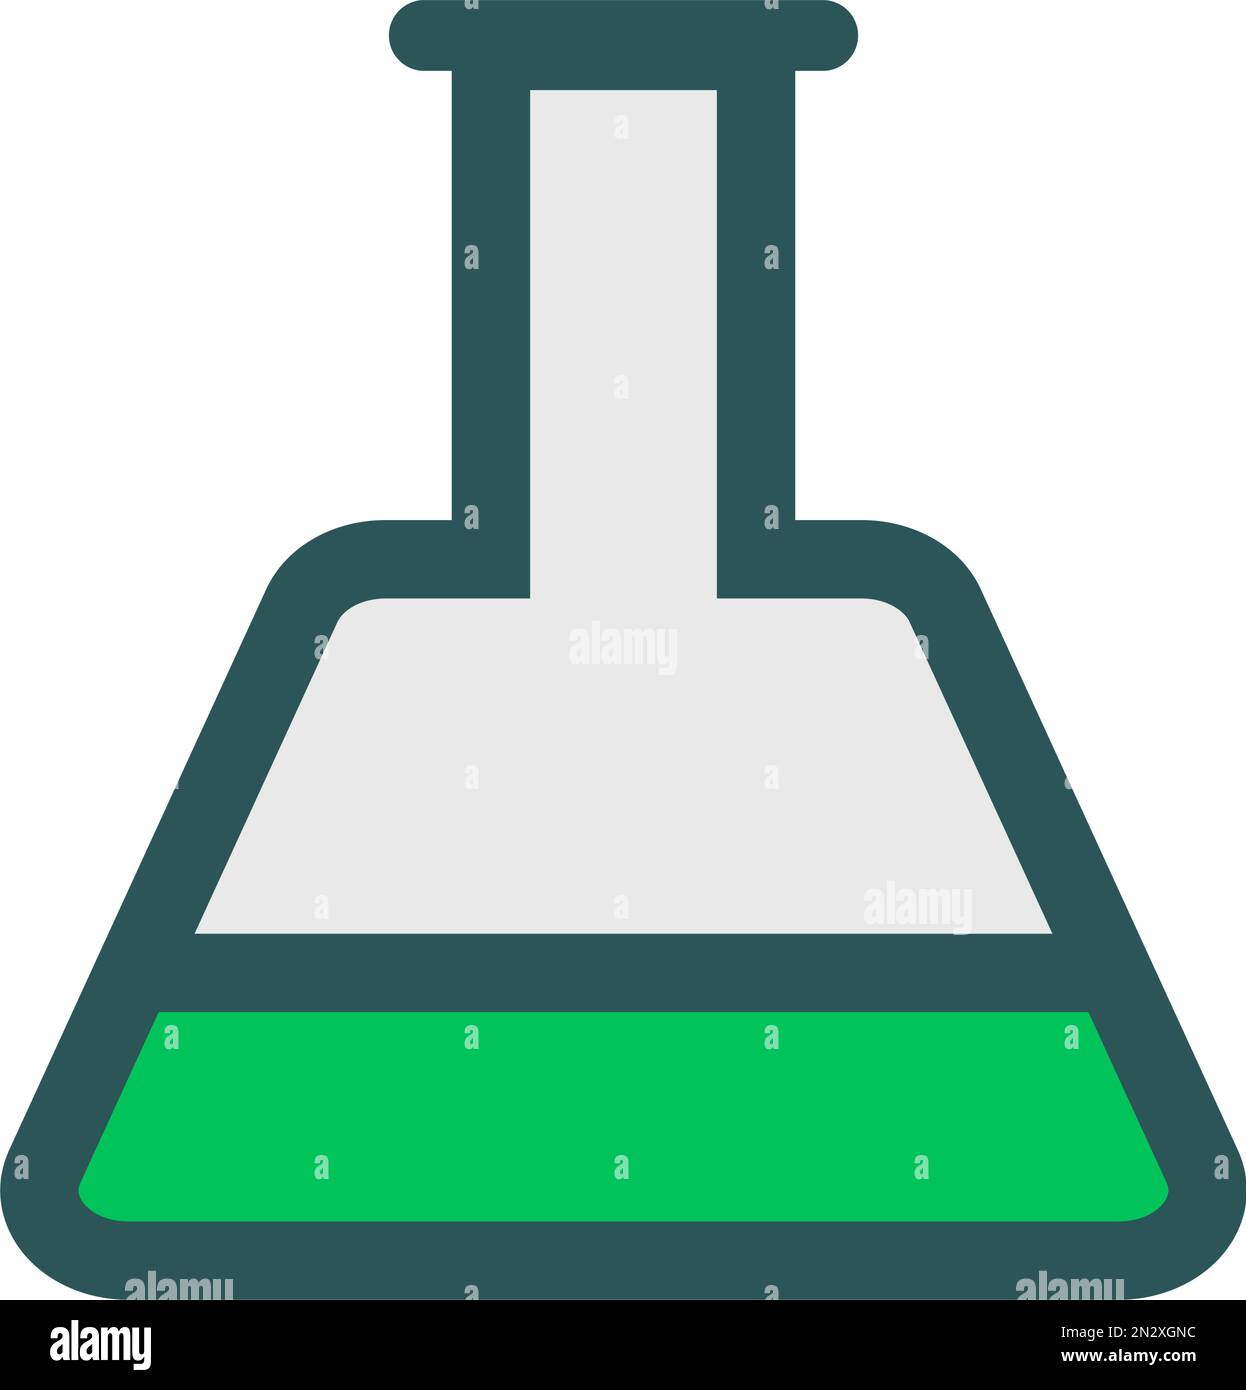 Triangular flask icon of a chemistry experiment. Editable vector. Stock Vector